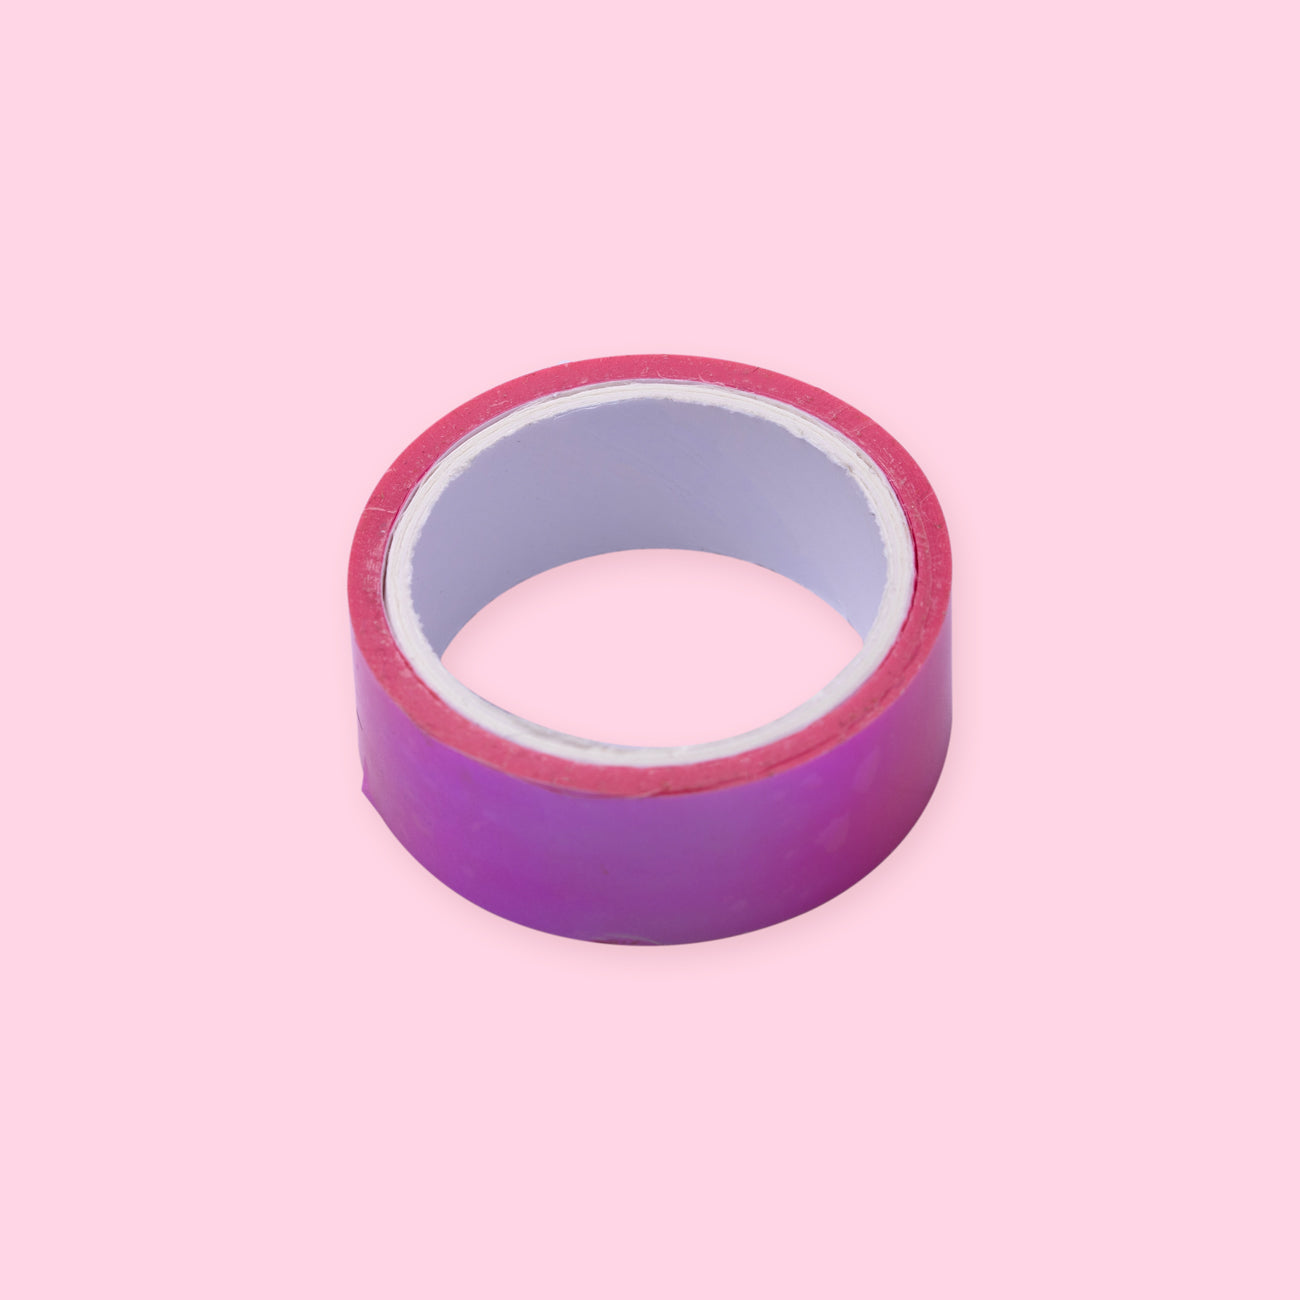 Fuchsia Pink Glitter Washi Tape Decorative Tape 15mm x 5m